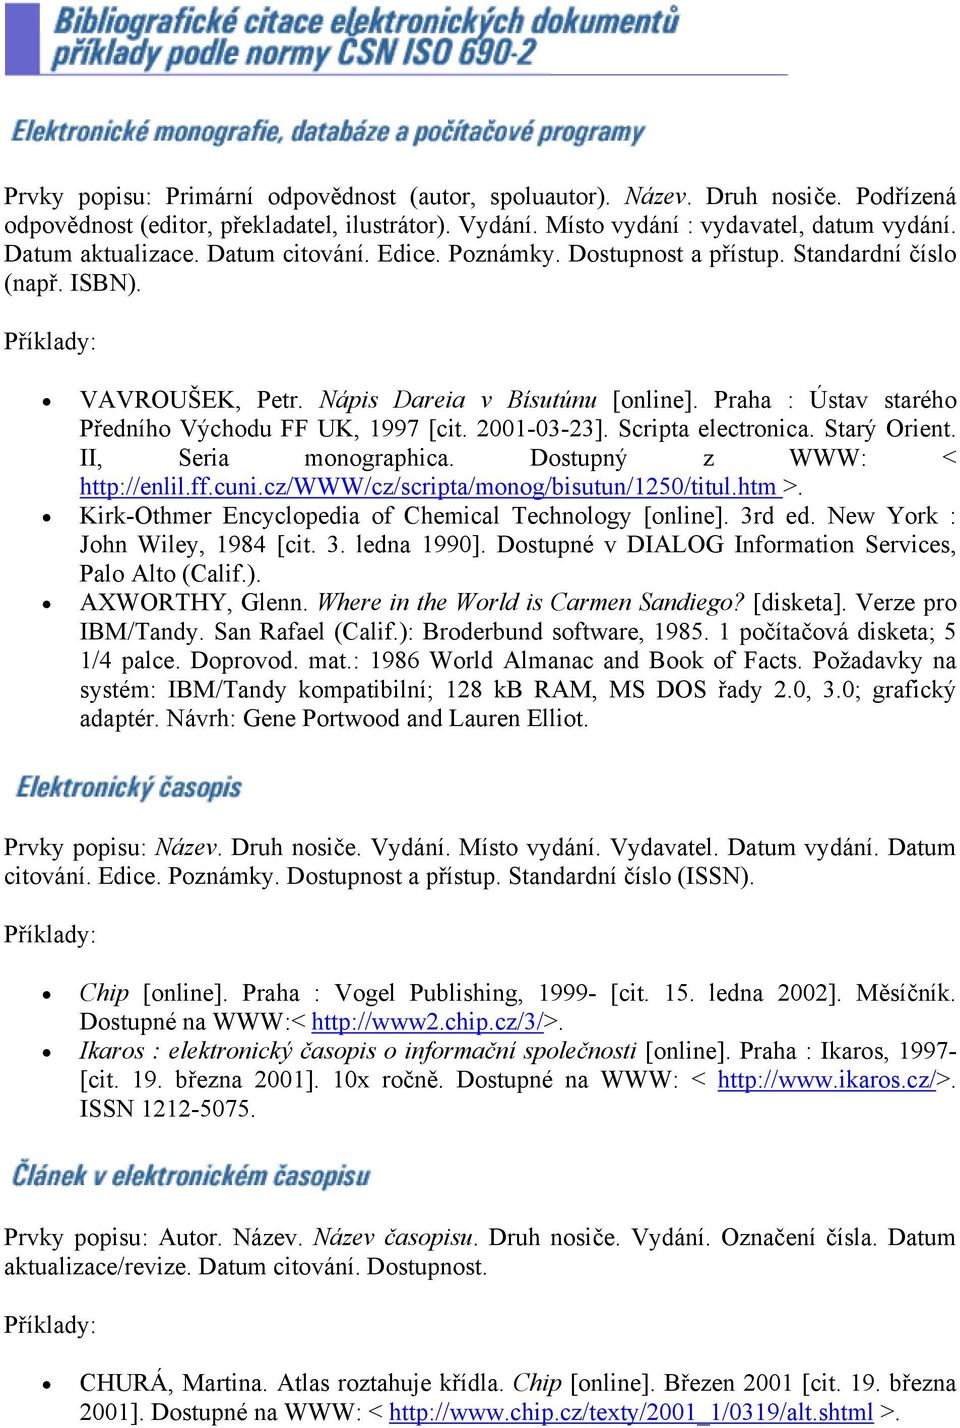 2001-03-23]. Scripta electronica. Starý Orient. II, Seria monographica. Dostupný z WWW: < http://enlil.ff.cuni.cz/www/cz/scripta/monog/bisutun/1250/titul.htm >.